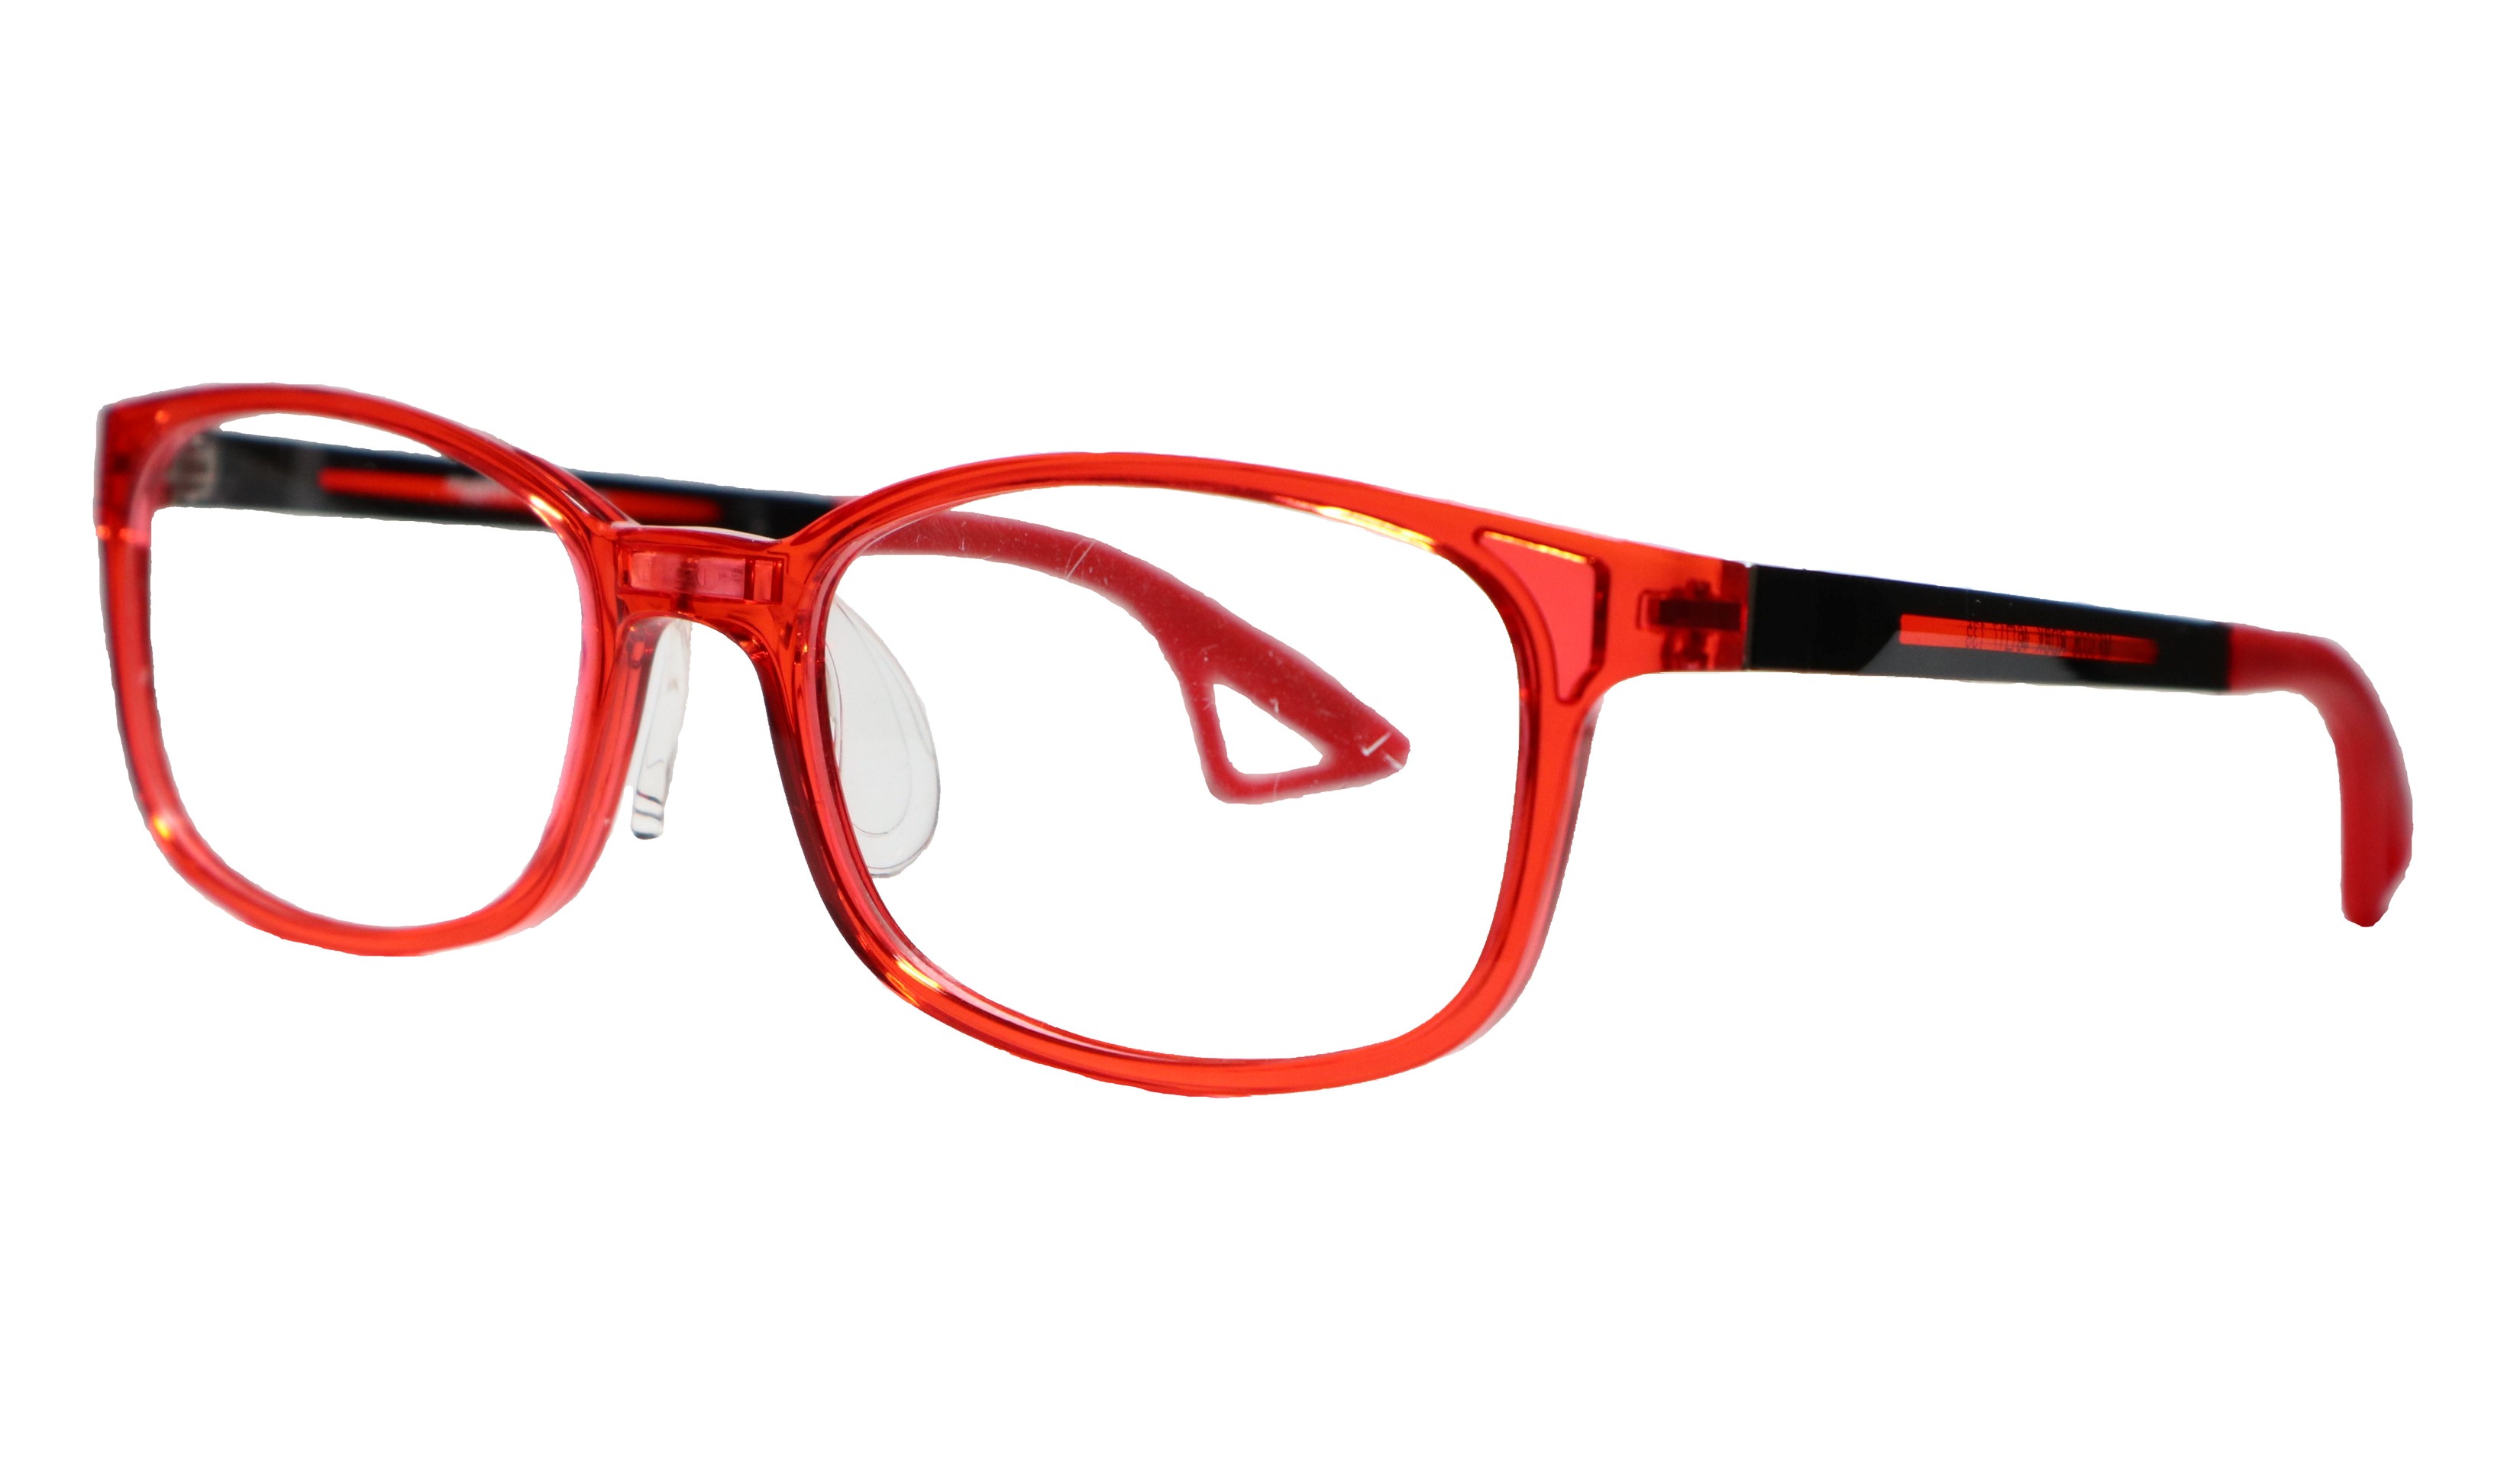 Myopia control glasses